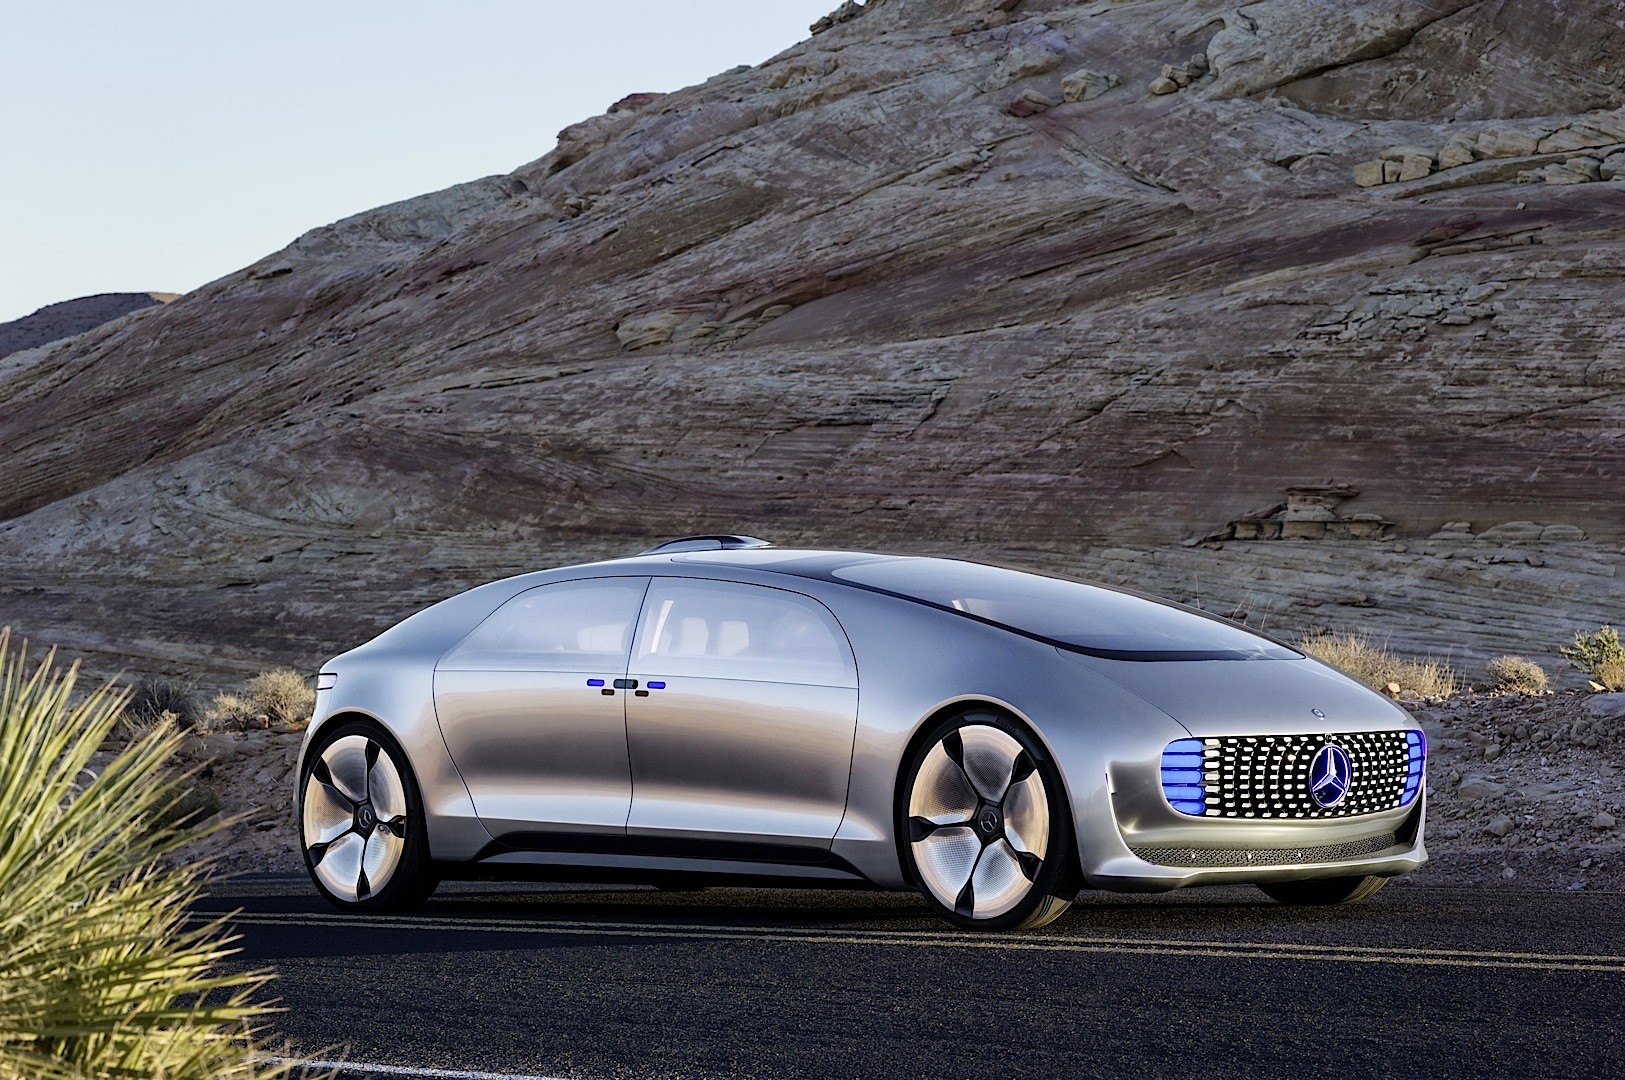 Daimler should make e-car components to protect jobs: labor boss